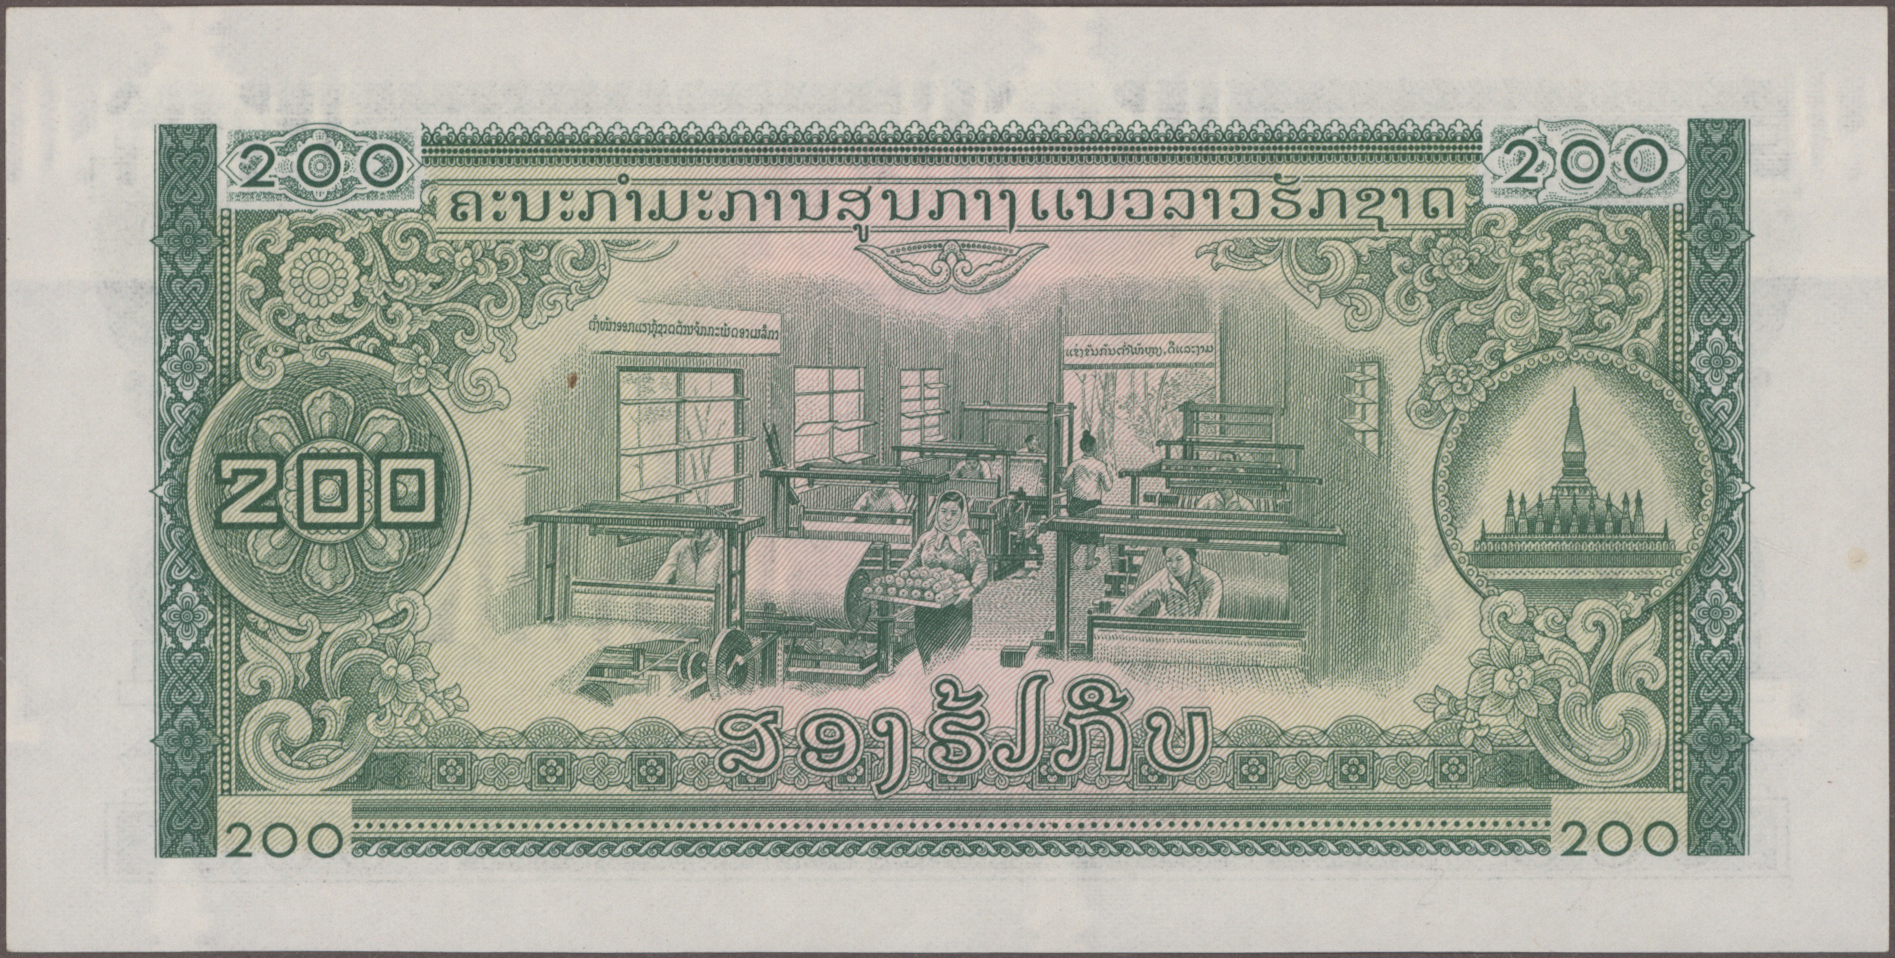 Lot 00265 - Laos | Banknoten  -  Auktionshaus Christoph Gärtner GmbH & Co. KG 55th AUCTION - Day 1